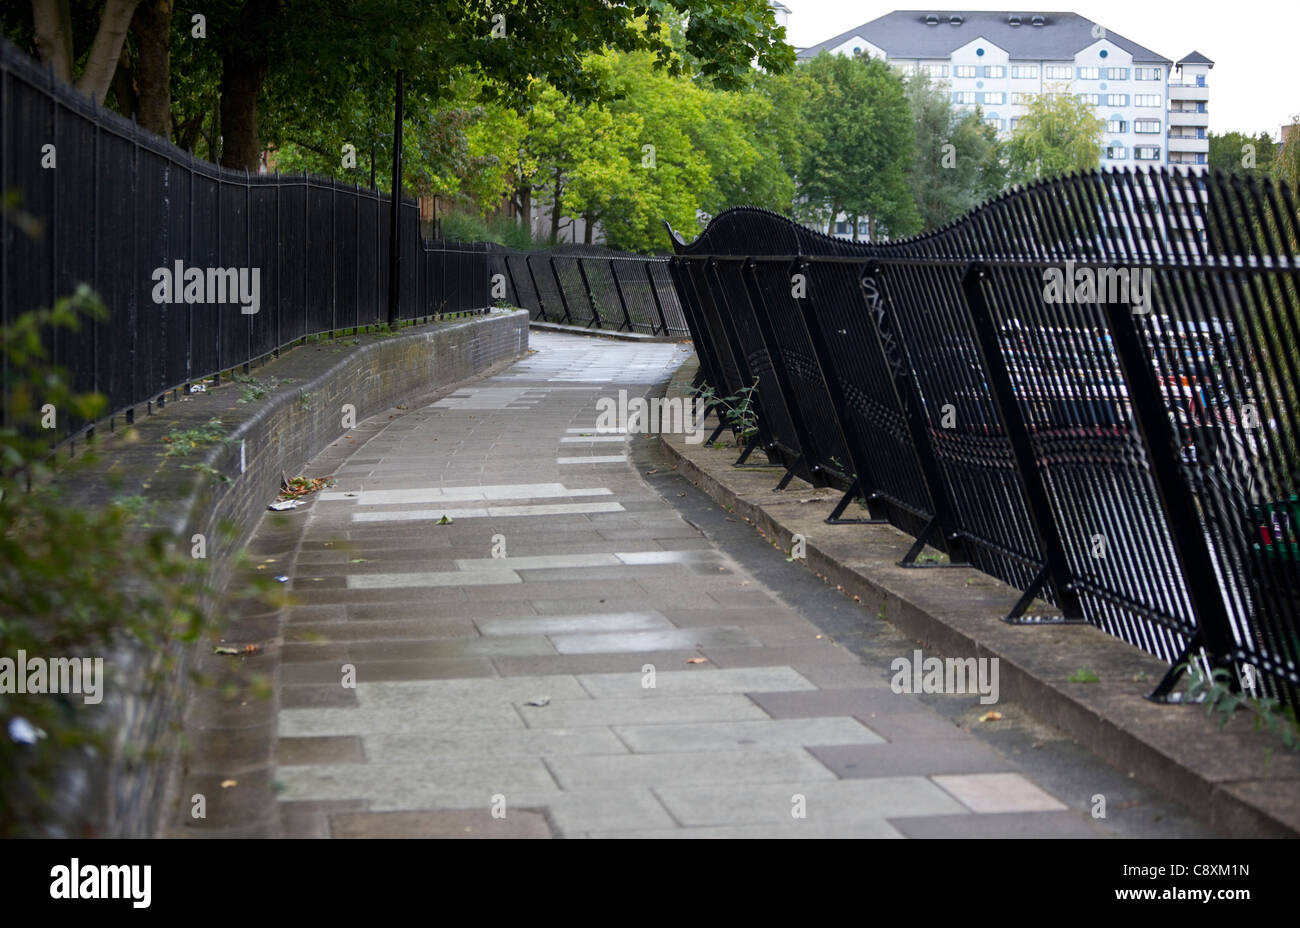 Paved walking path and railings, UK Stock Photo